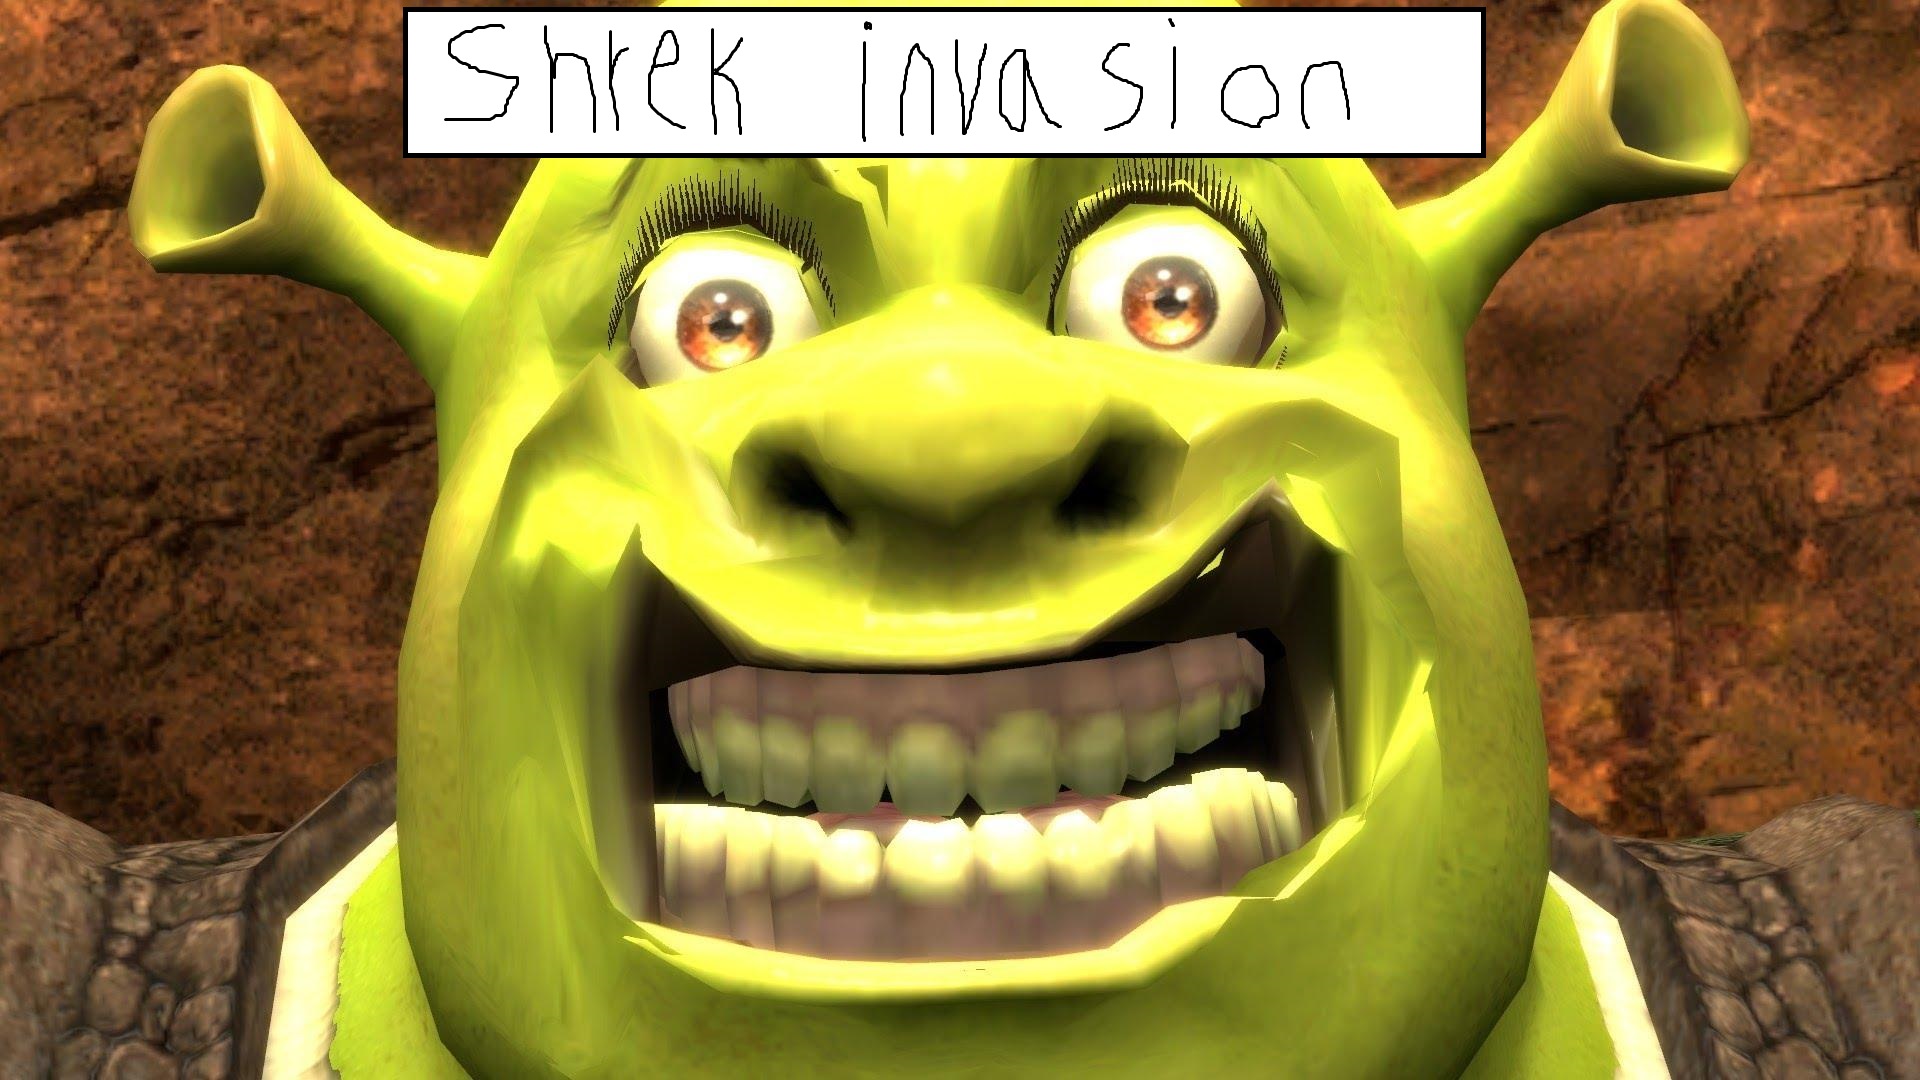 Shrek Invasion by ArnarSkarnar, EMIDEX321